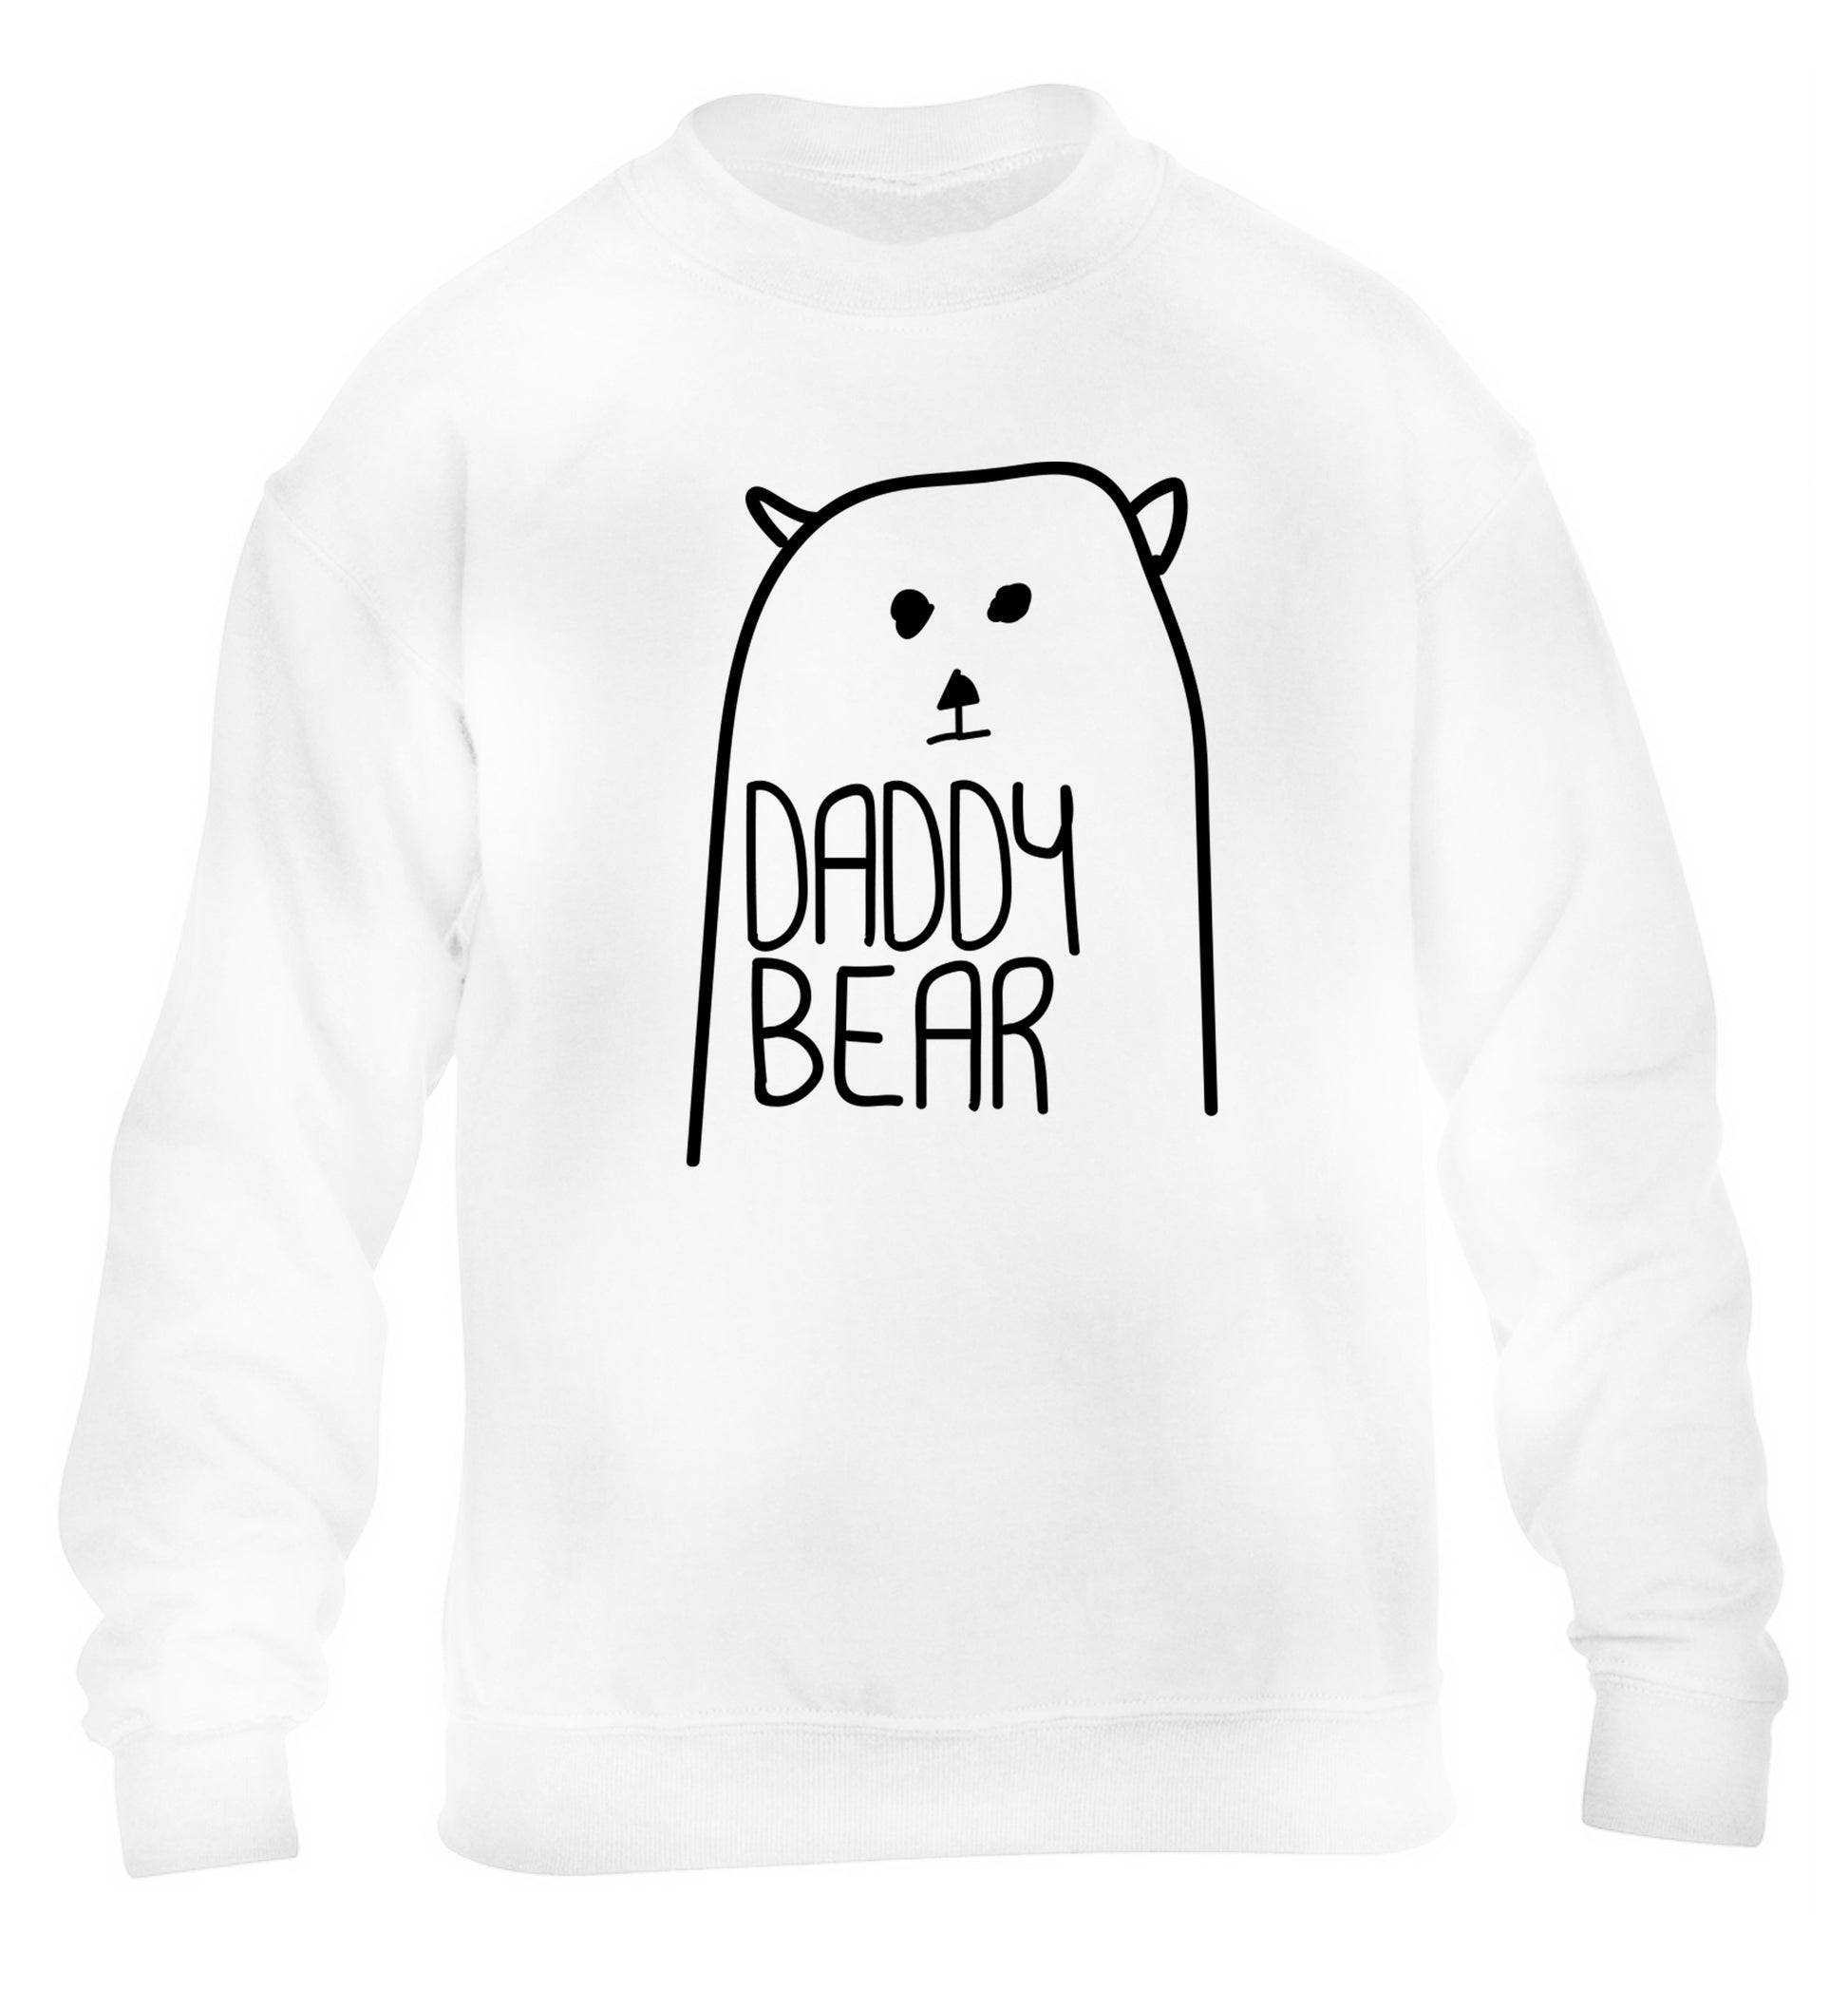 Daddy bear children's white sweater 12-13 Years